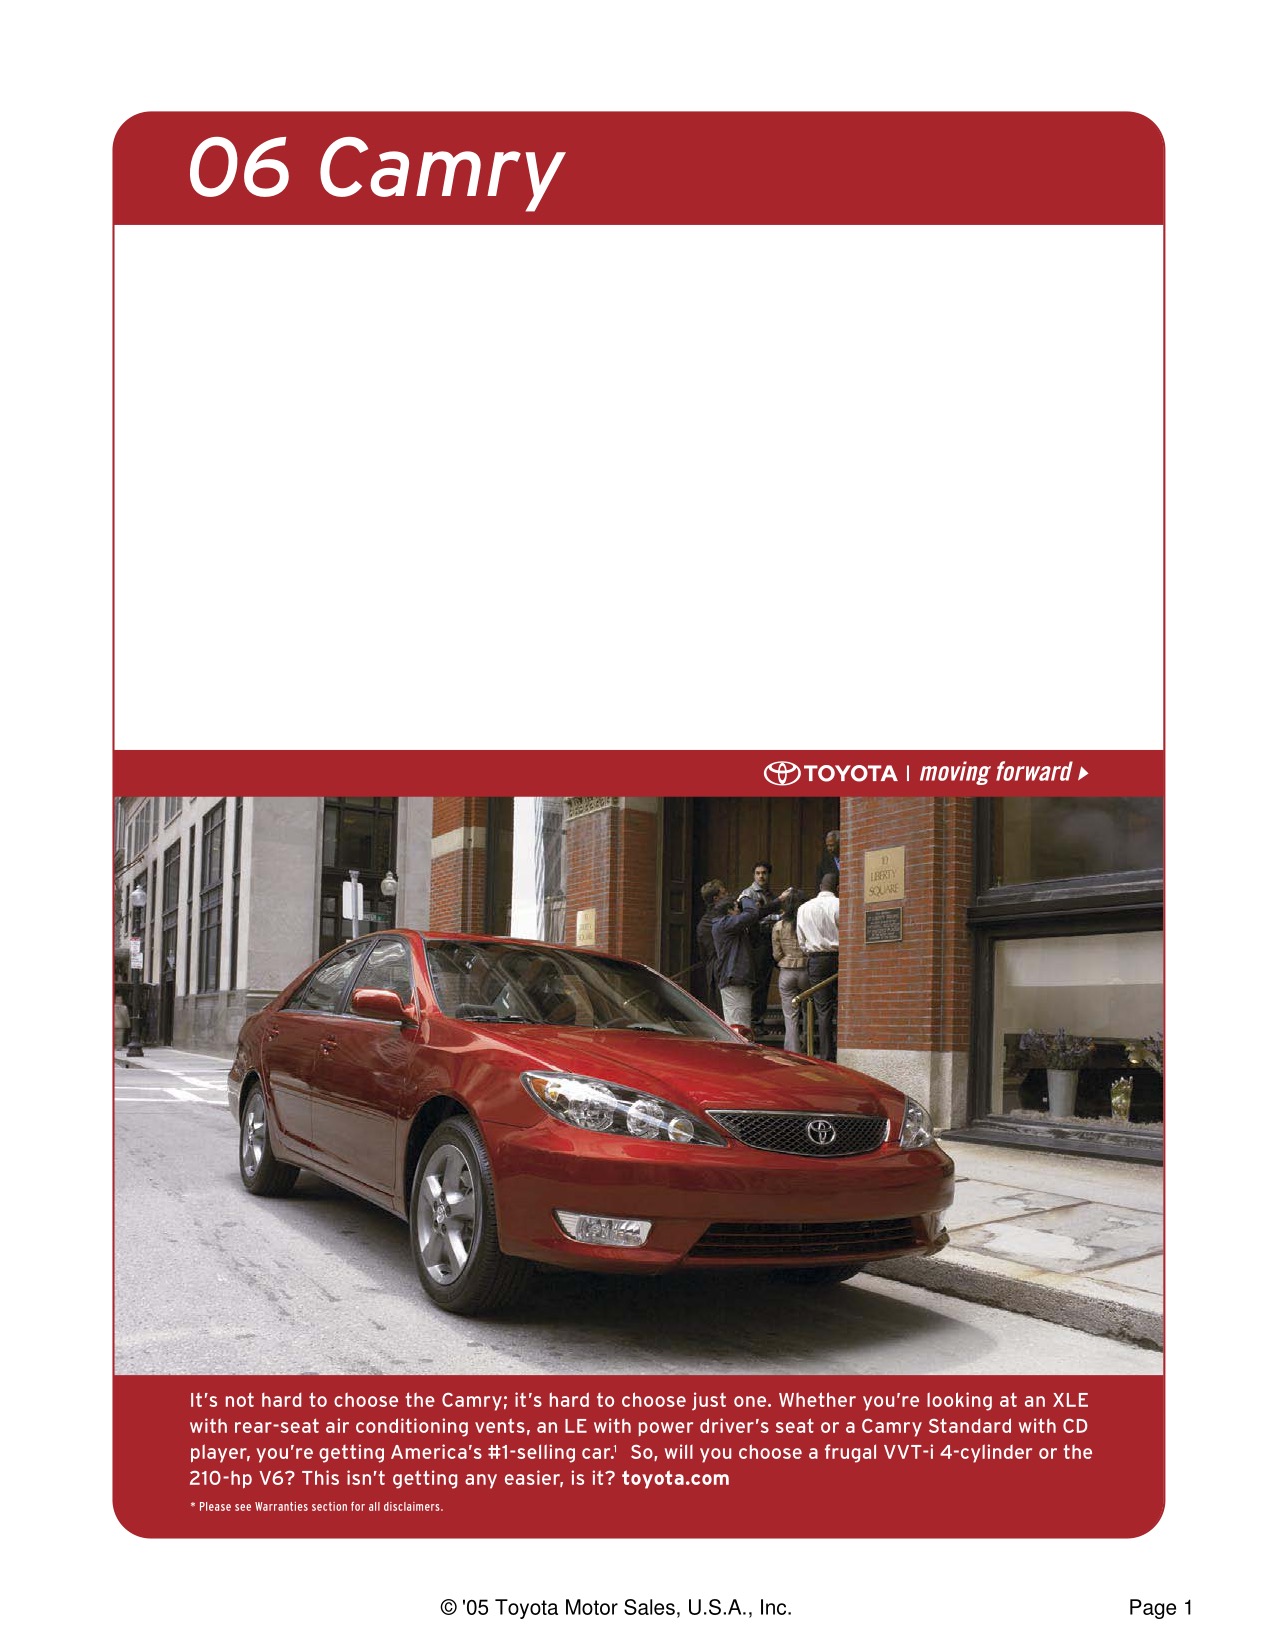 2006 Toyota Camry Brochure